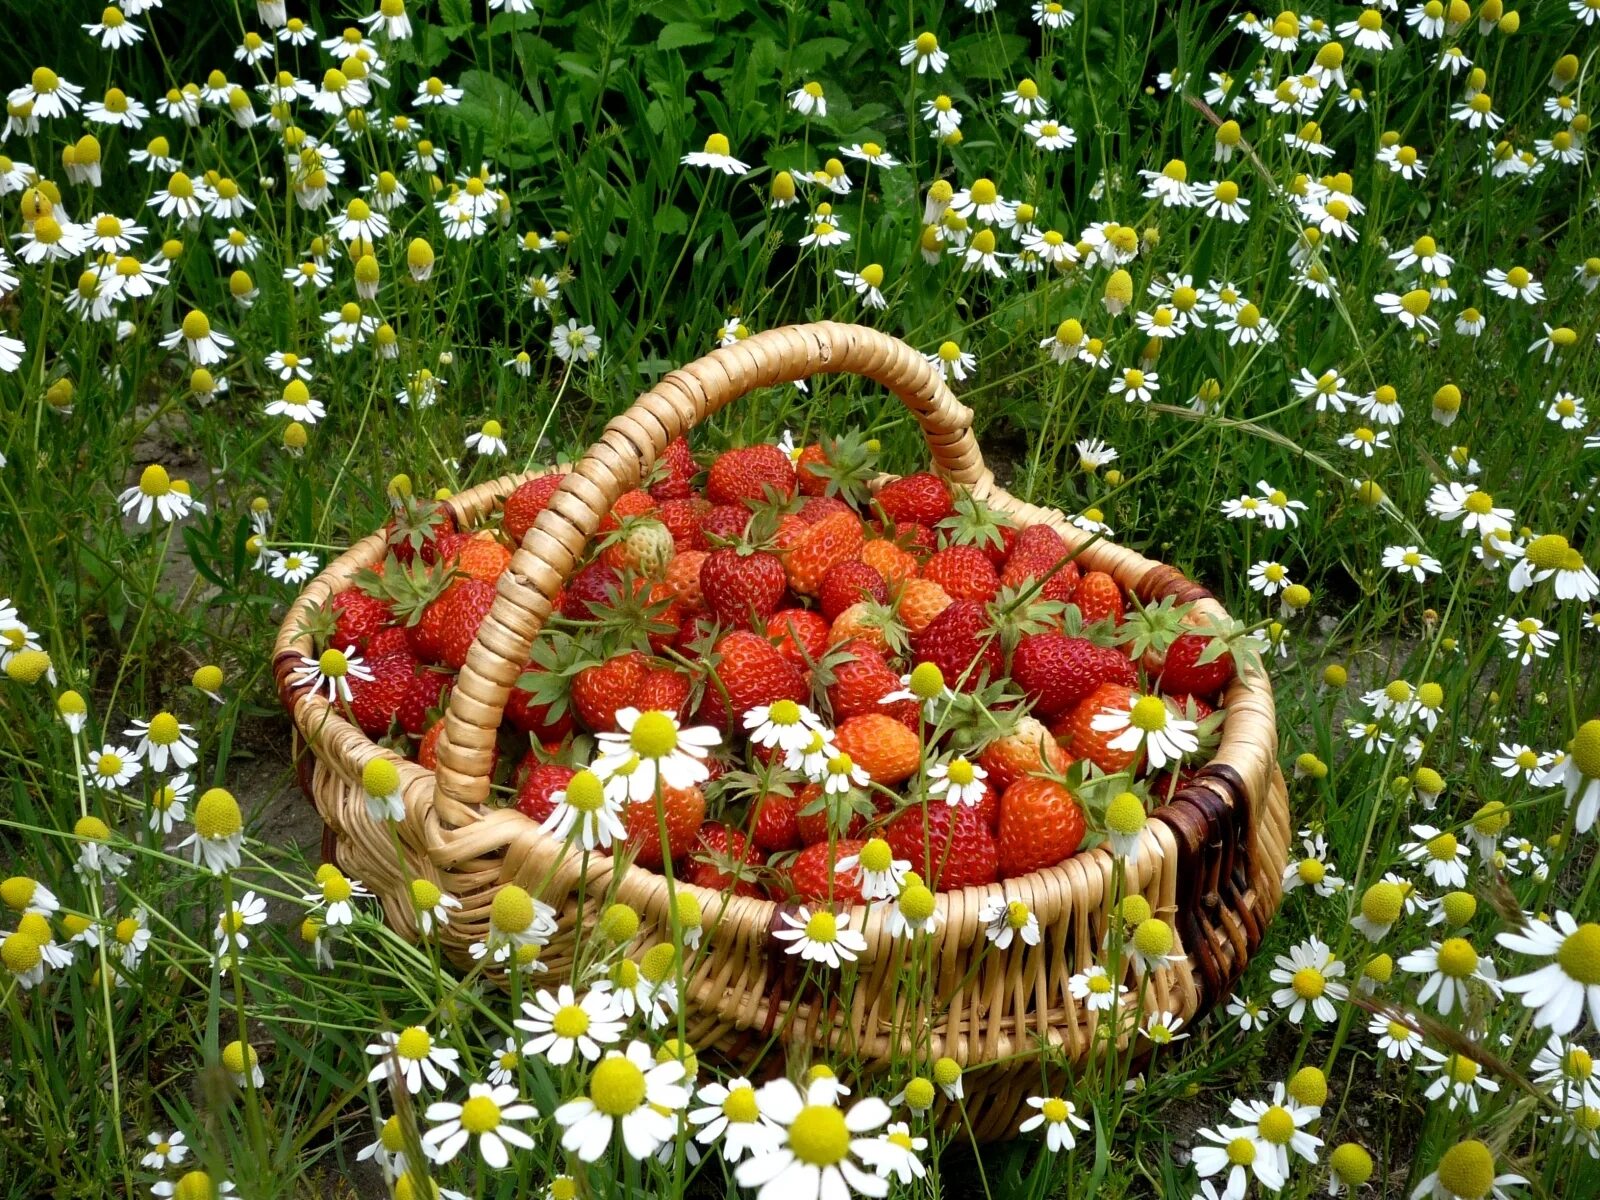 Начало лето месяц. Лето ягоды цветы. Корзинка с ягодами. Корзина с ягодами и цветами. Лето корзинка с ягодами.